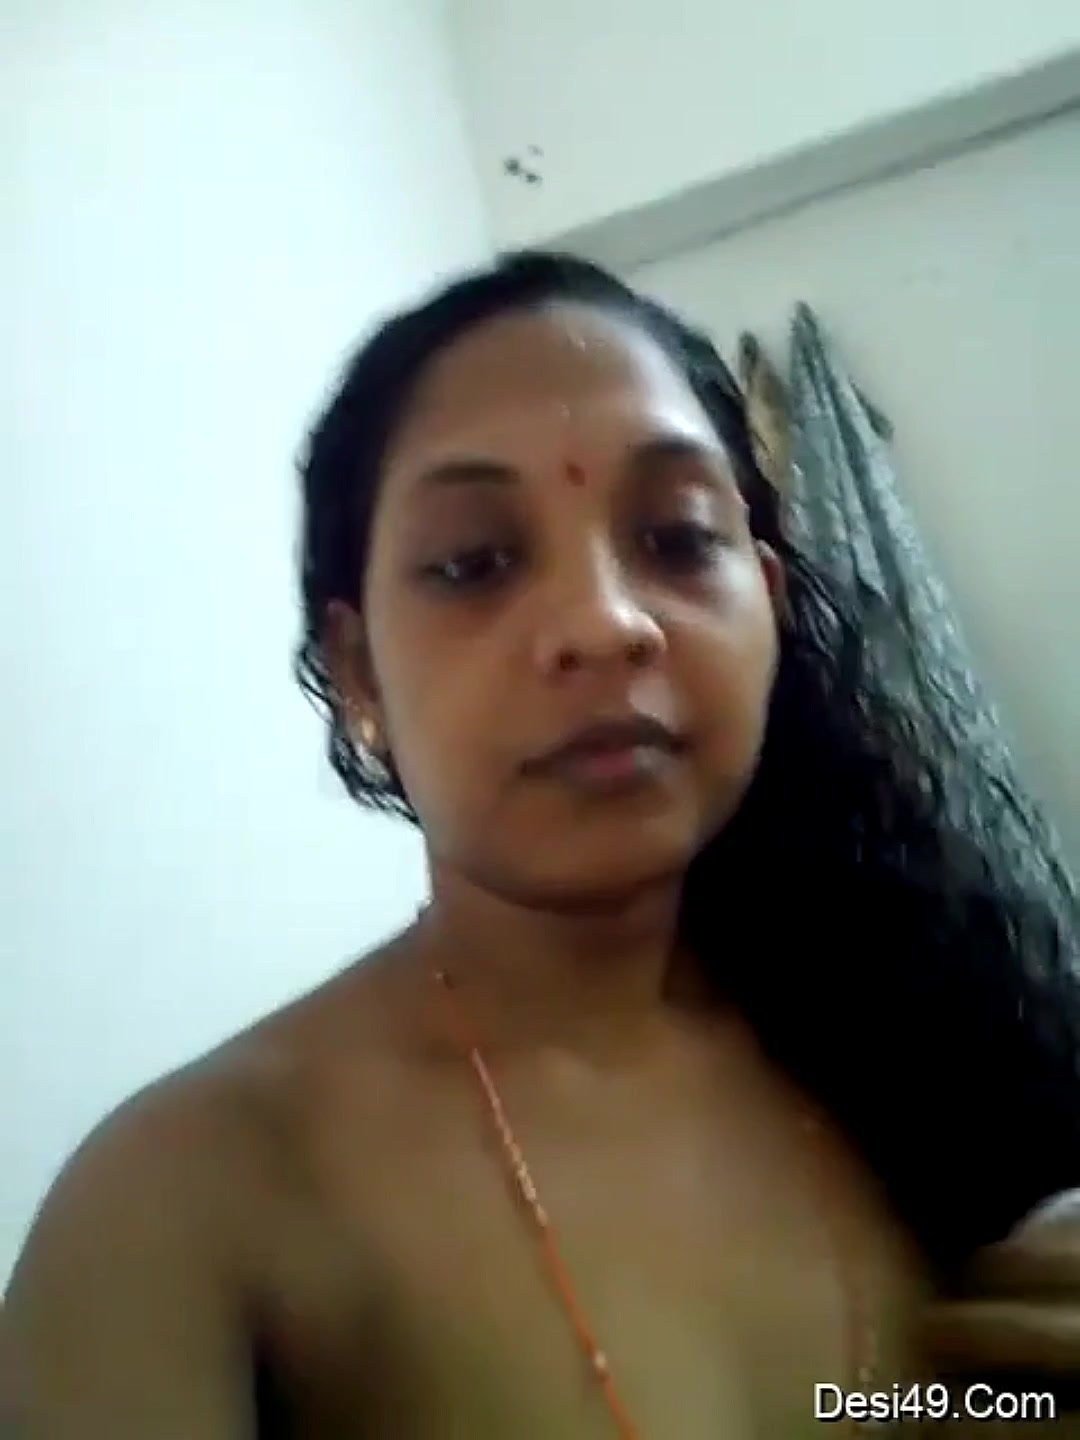 Kerala mallu bhabhi showing nude - ThisVid.com на русском